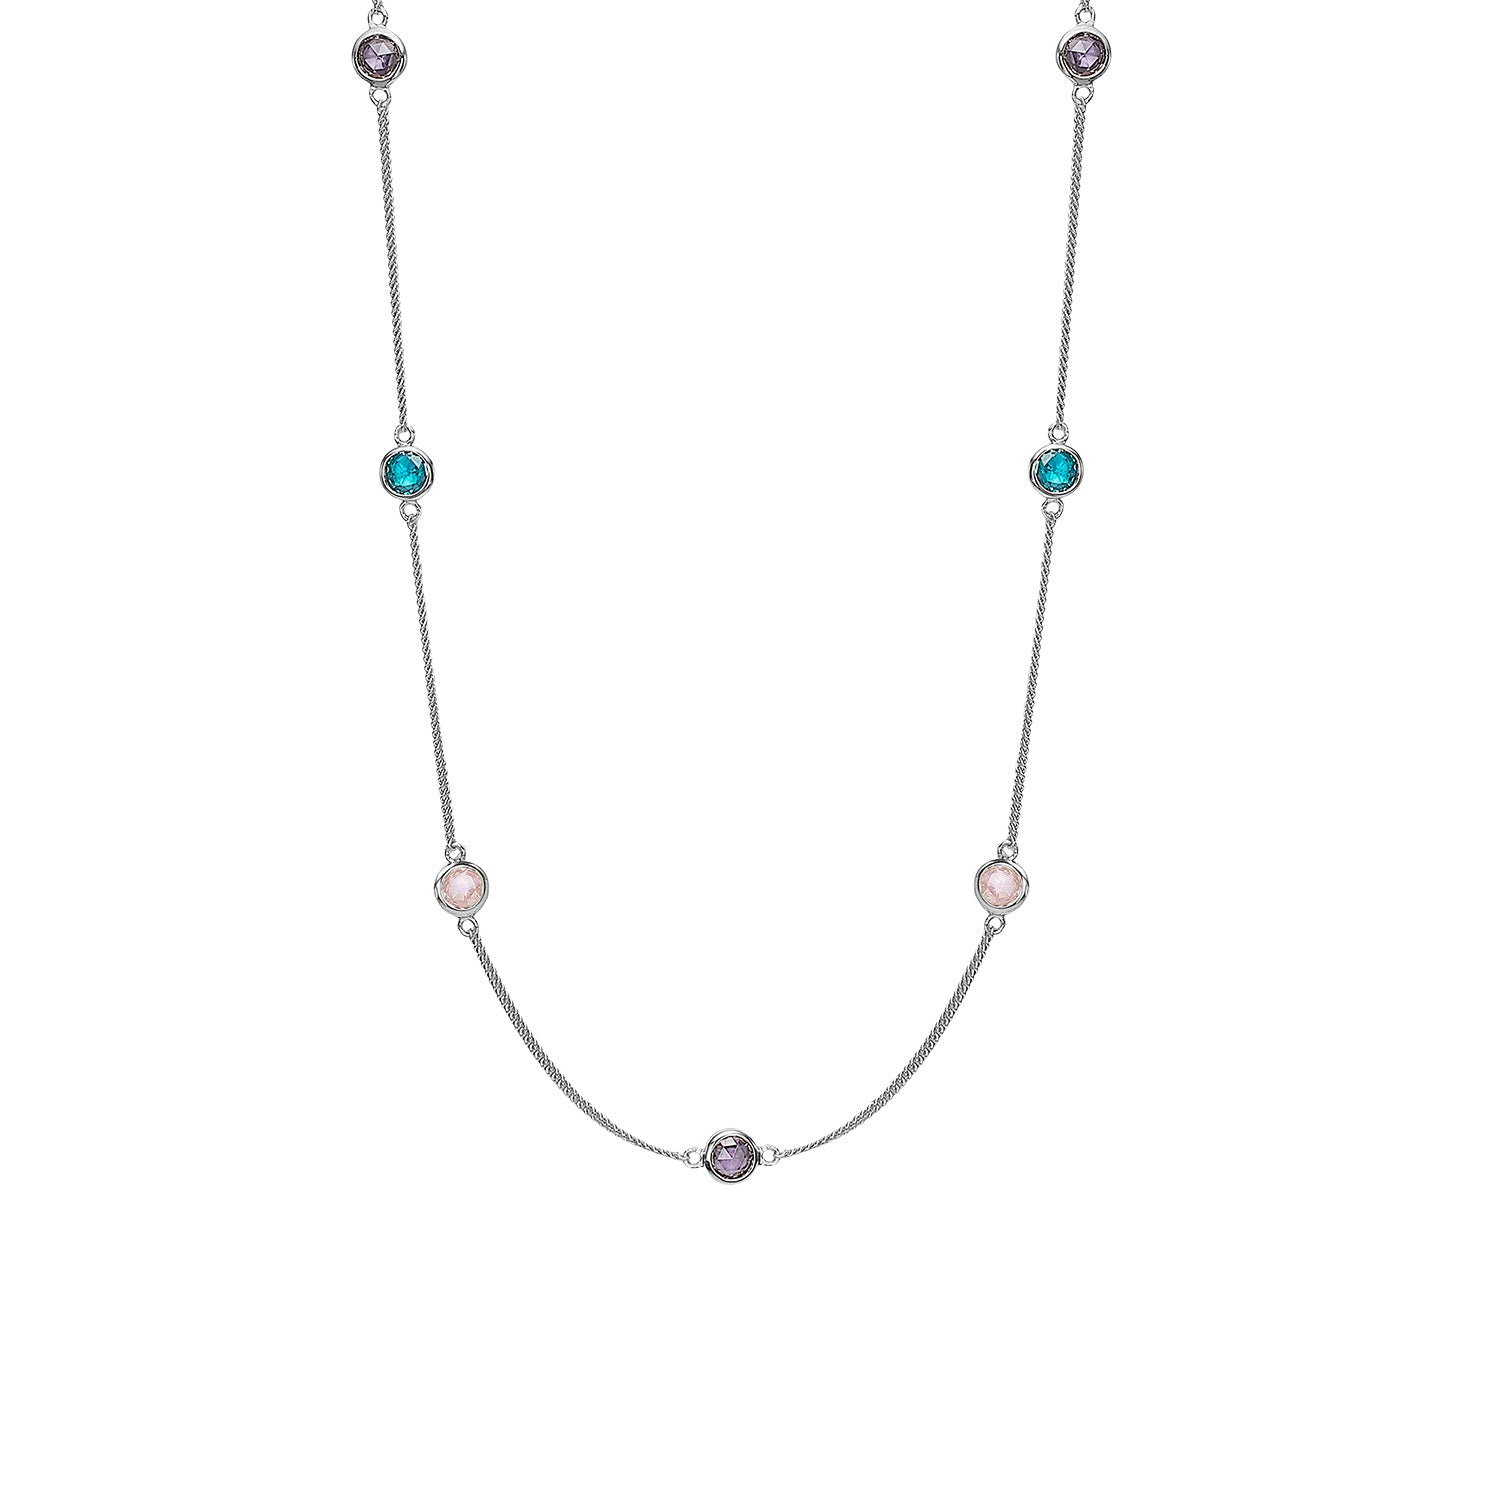 Christina Design London Jewelry & Watches - Colourful Champagne halskæde sølv sterlingsølv